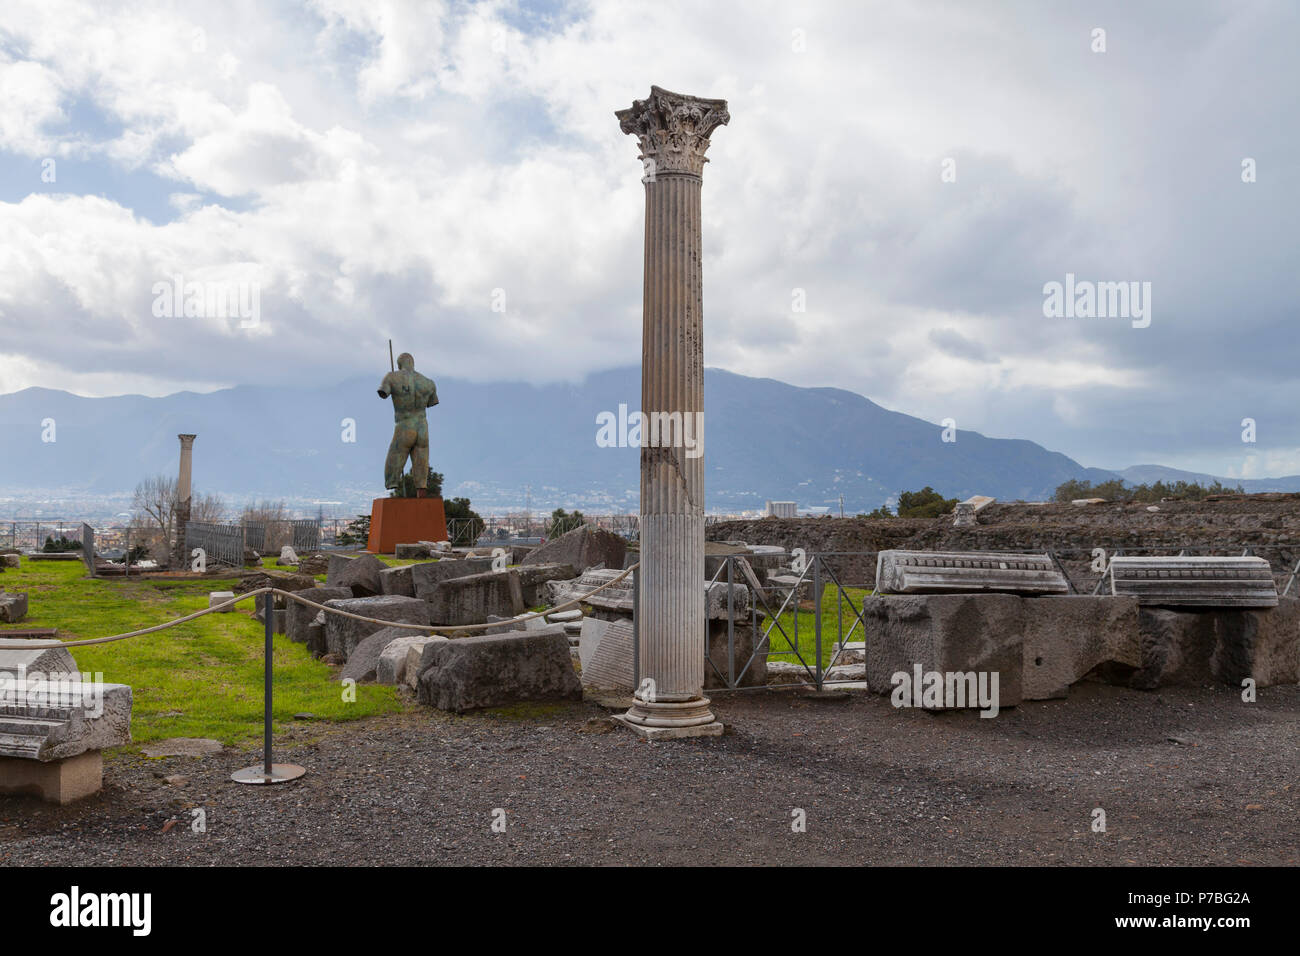 Spalte zentriert Statue den Vesuv Berge Landschaft Stockfoto